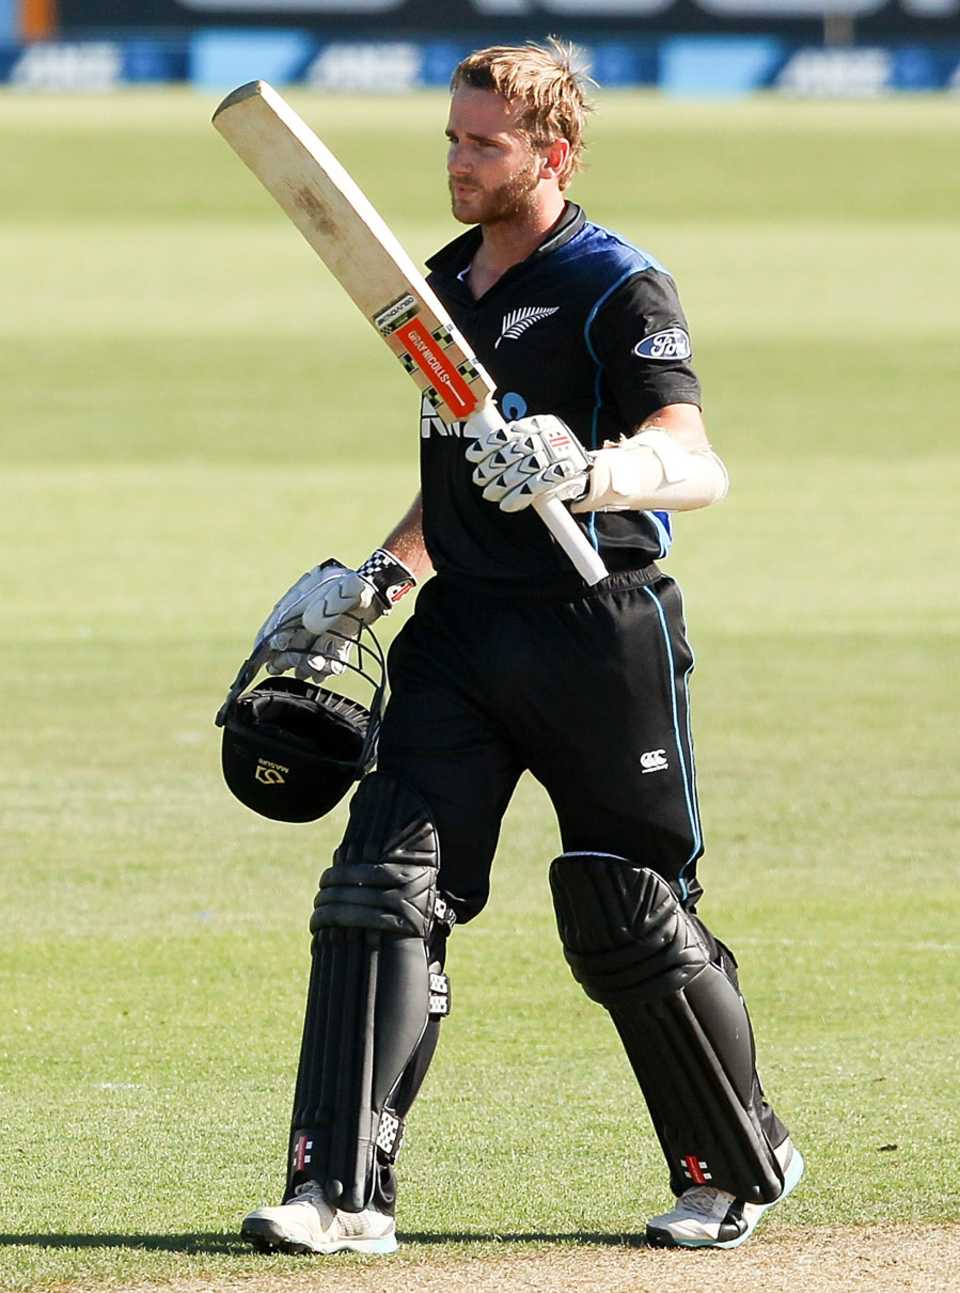 Kane Williamson made his fifth ODI century